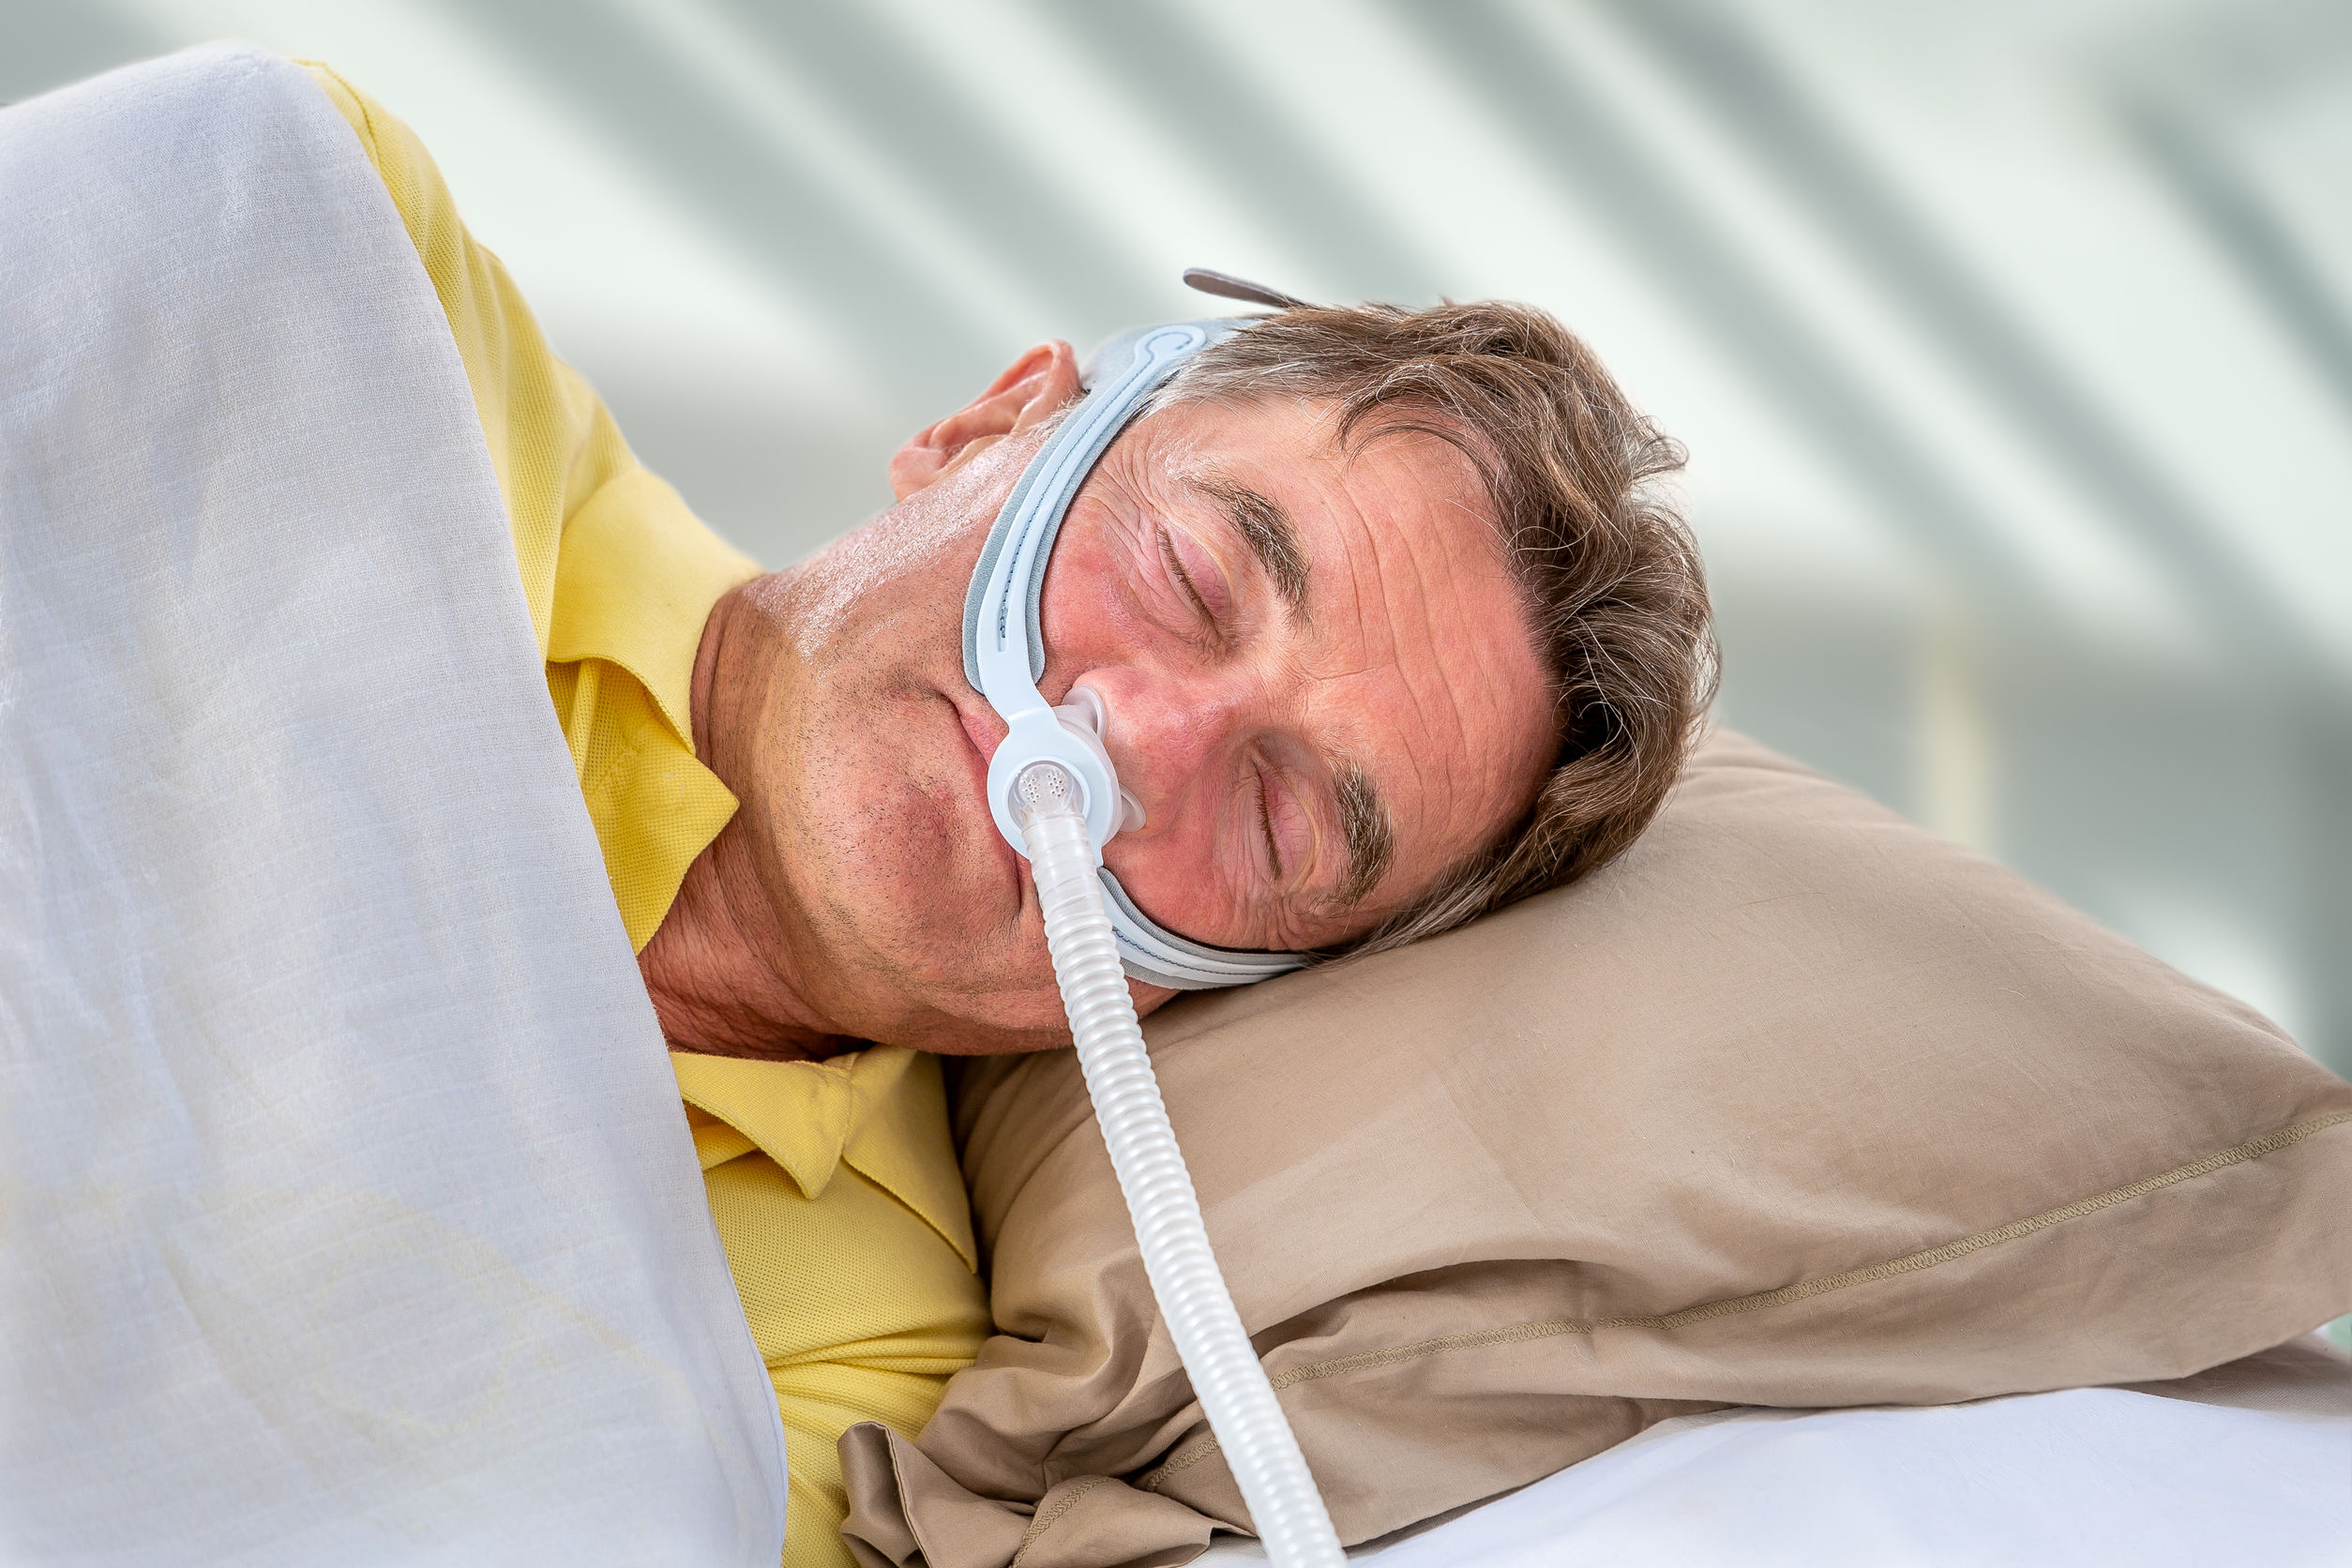 Obstructive sleeping apnea